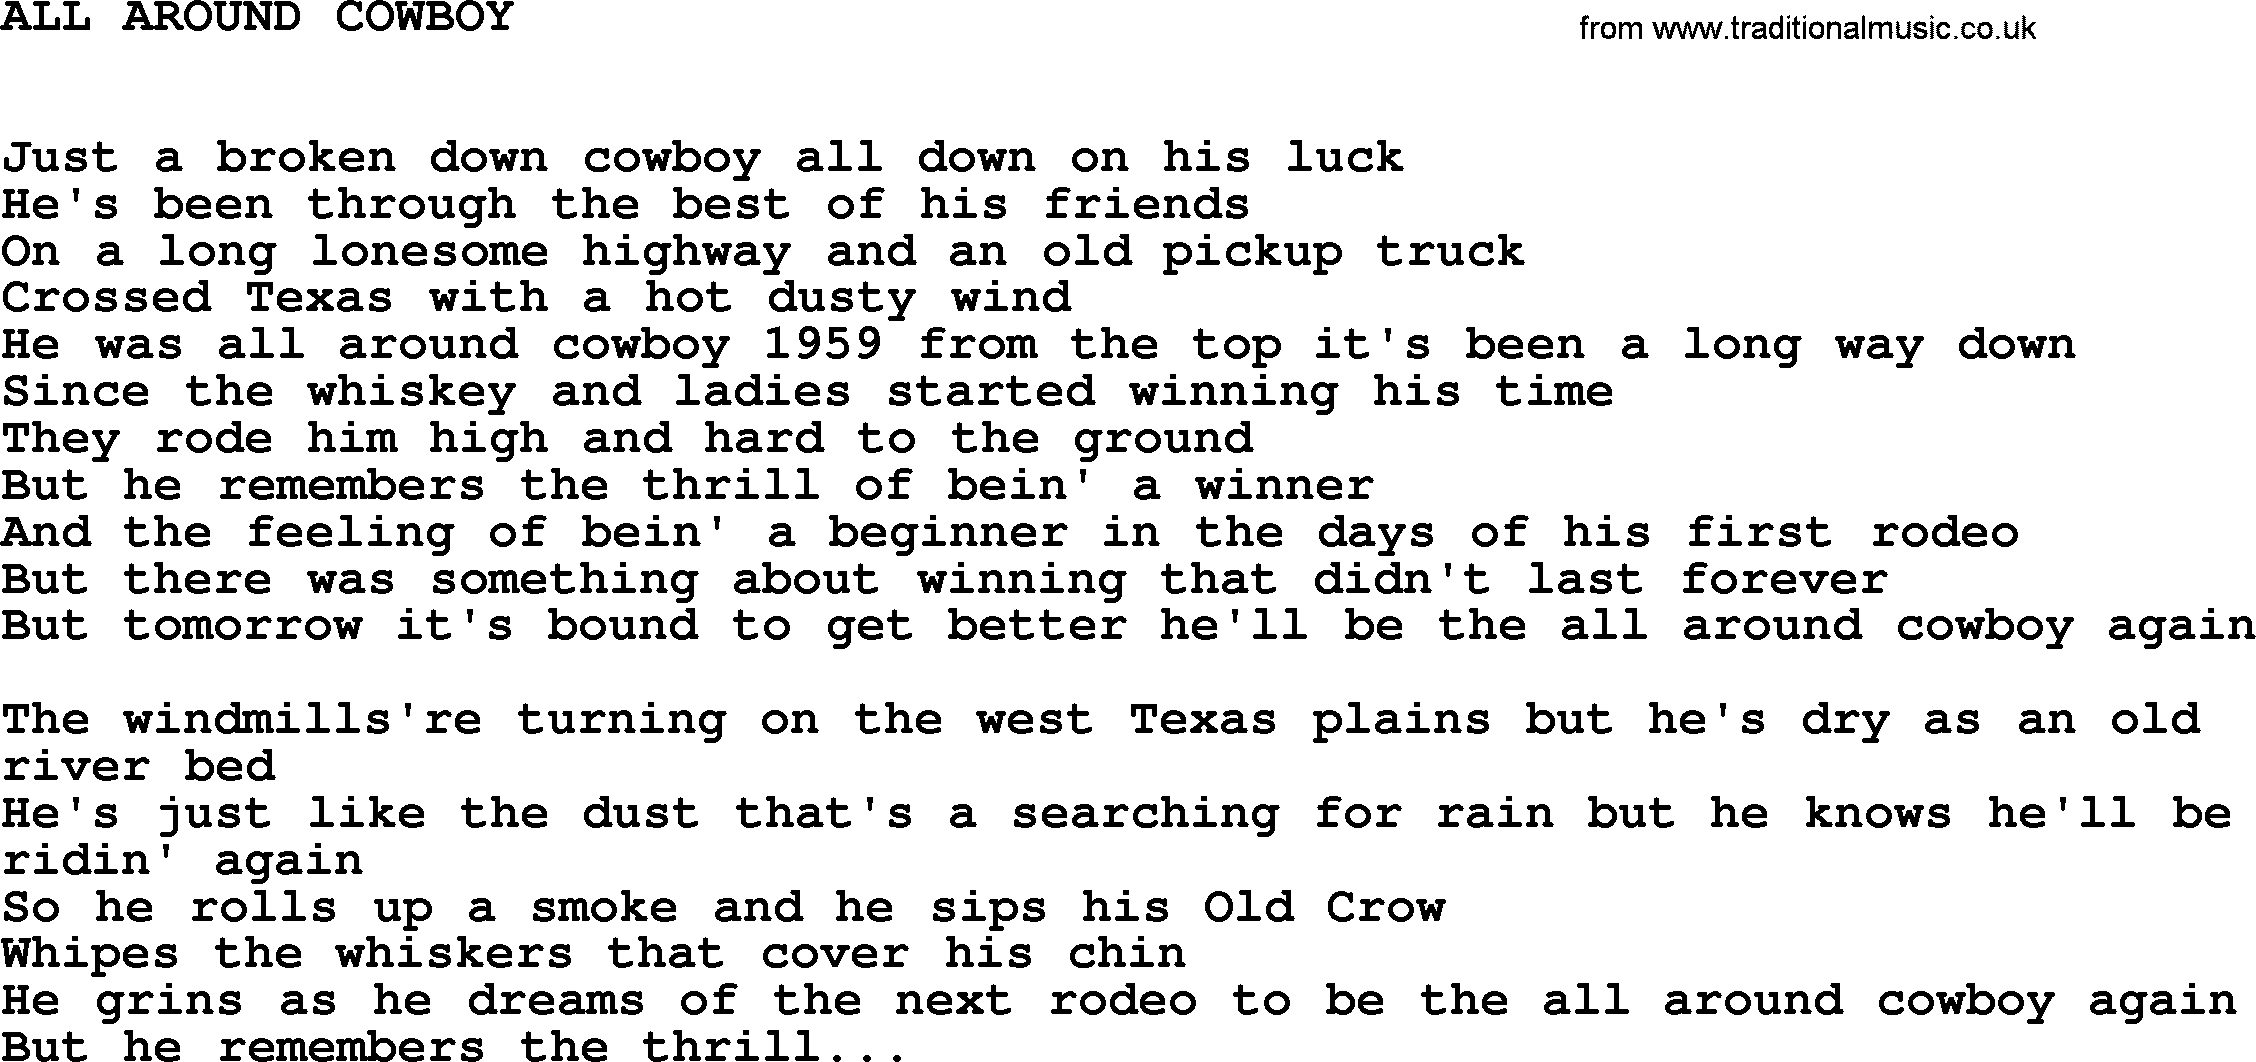 Johnny Cash song All Around Cowboy.txt lyrics